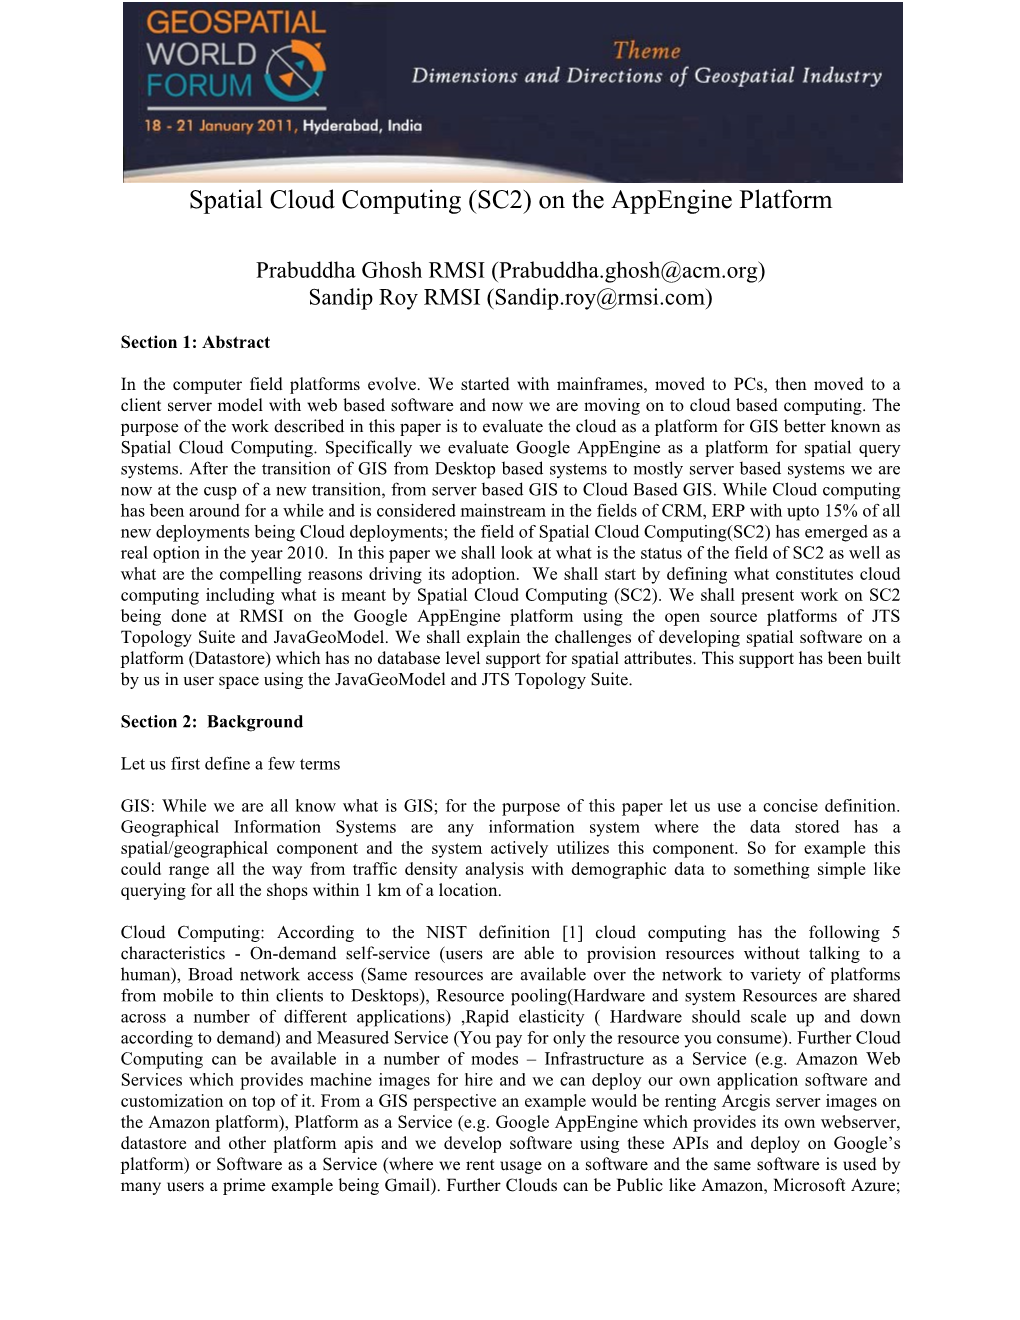 Spatial Cloud Computing (SC2) on the Appengine Platform